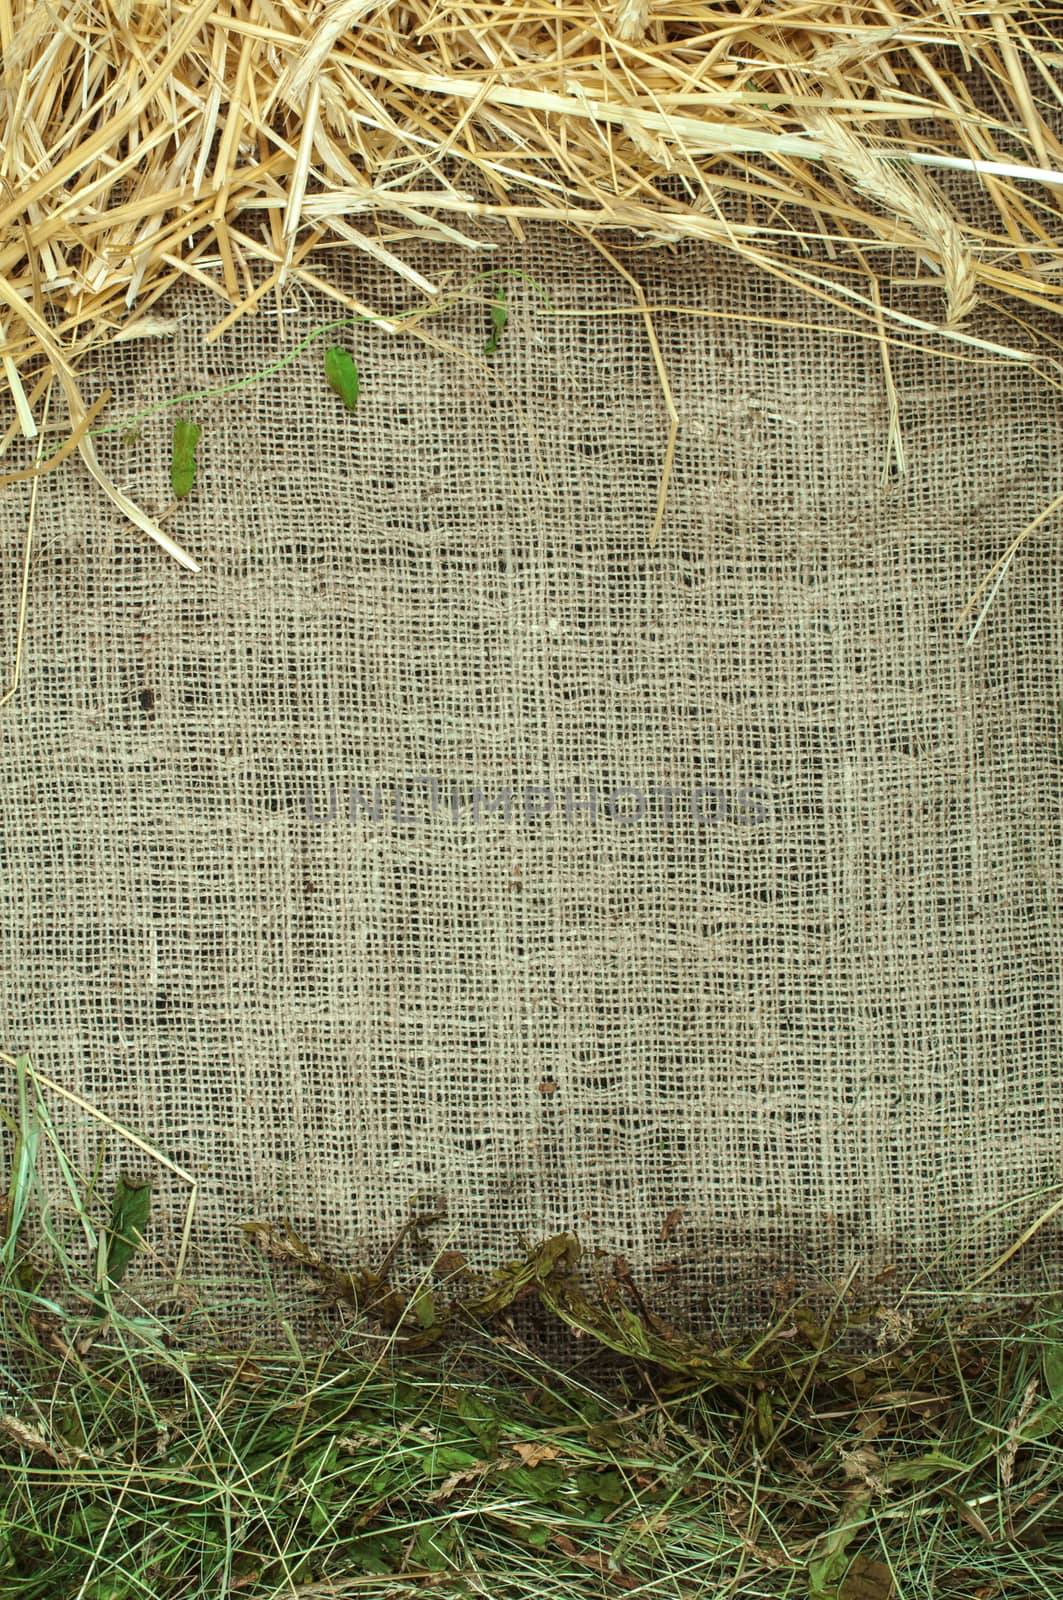 Straw and hay on burlap by deyan_georgiev